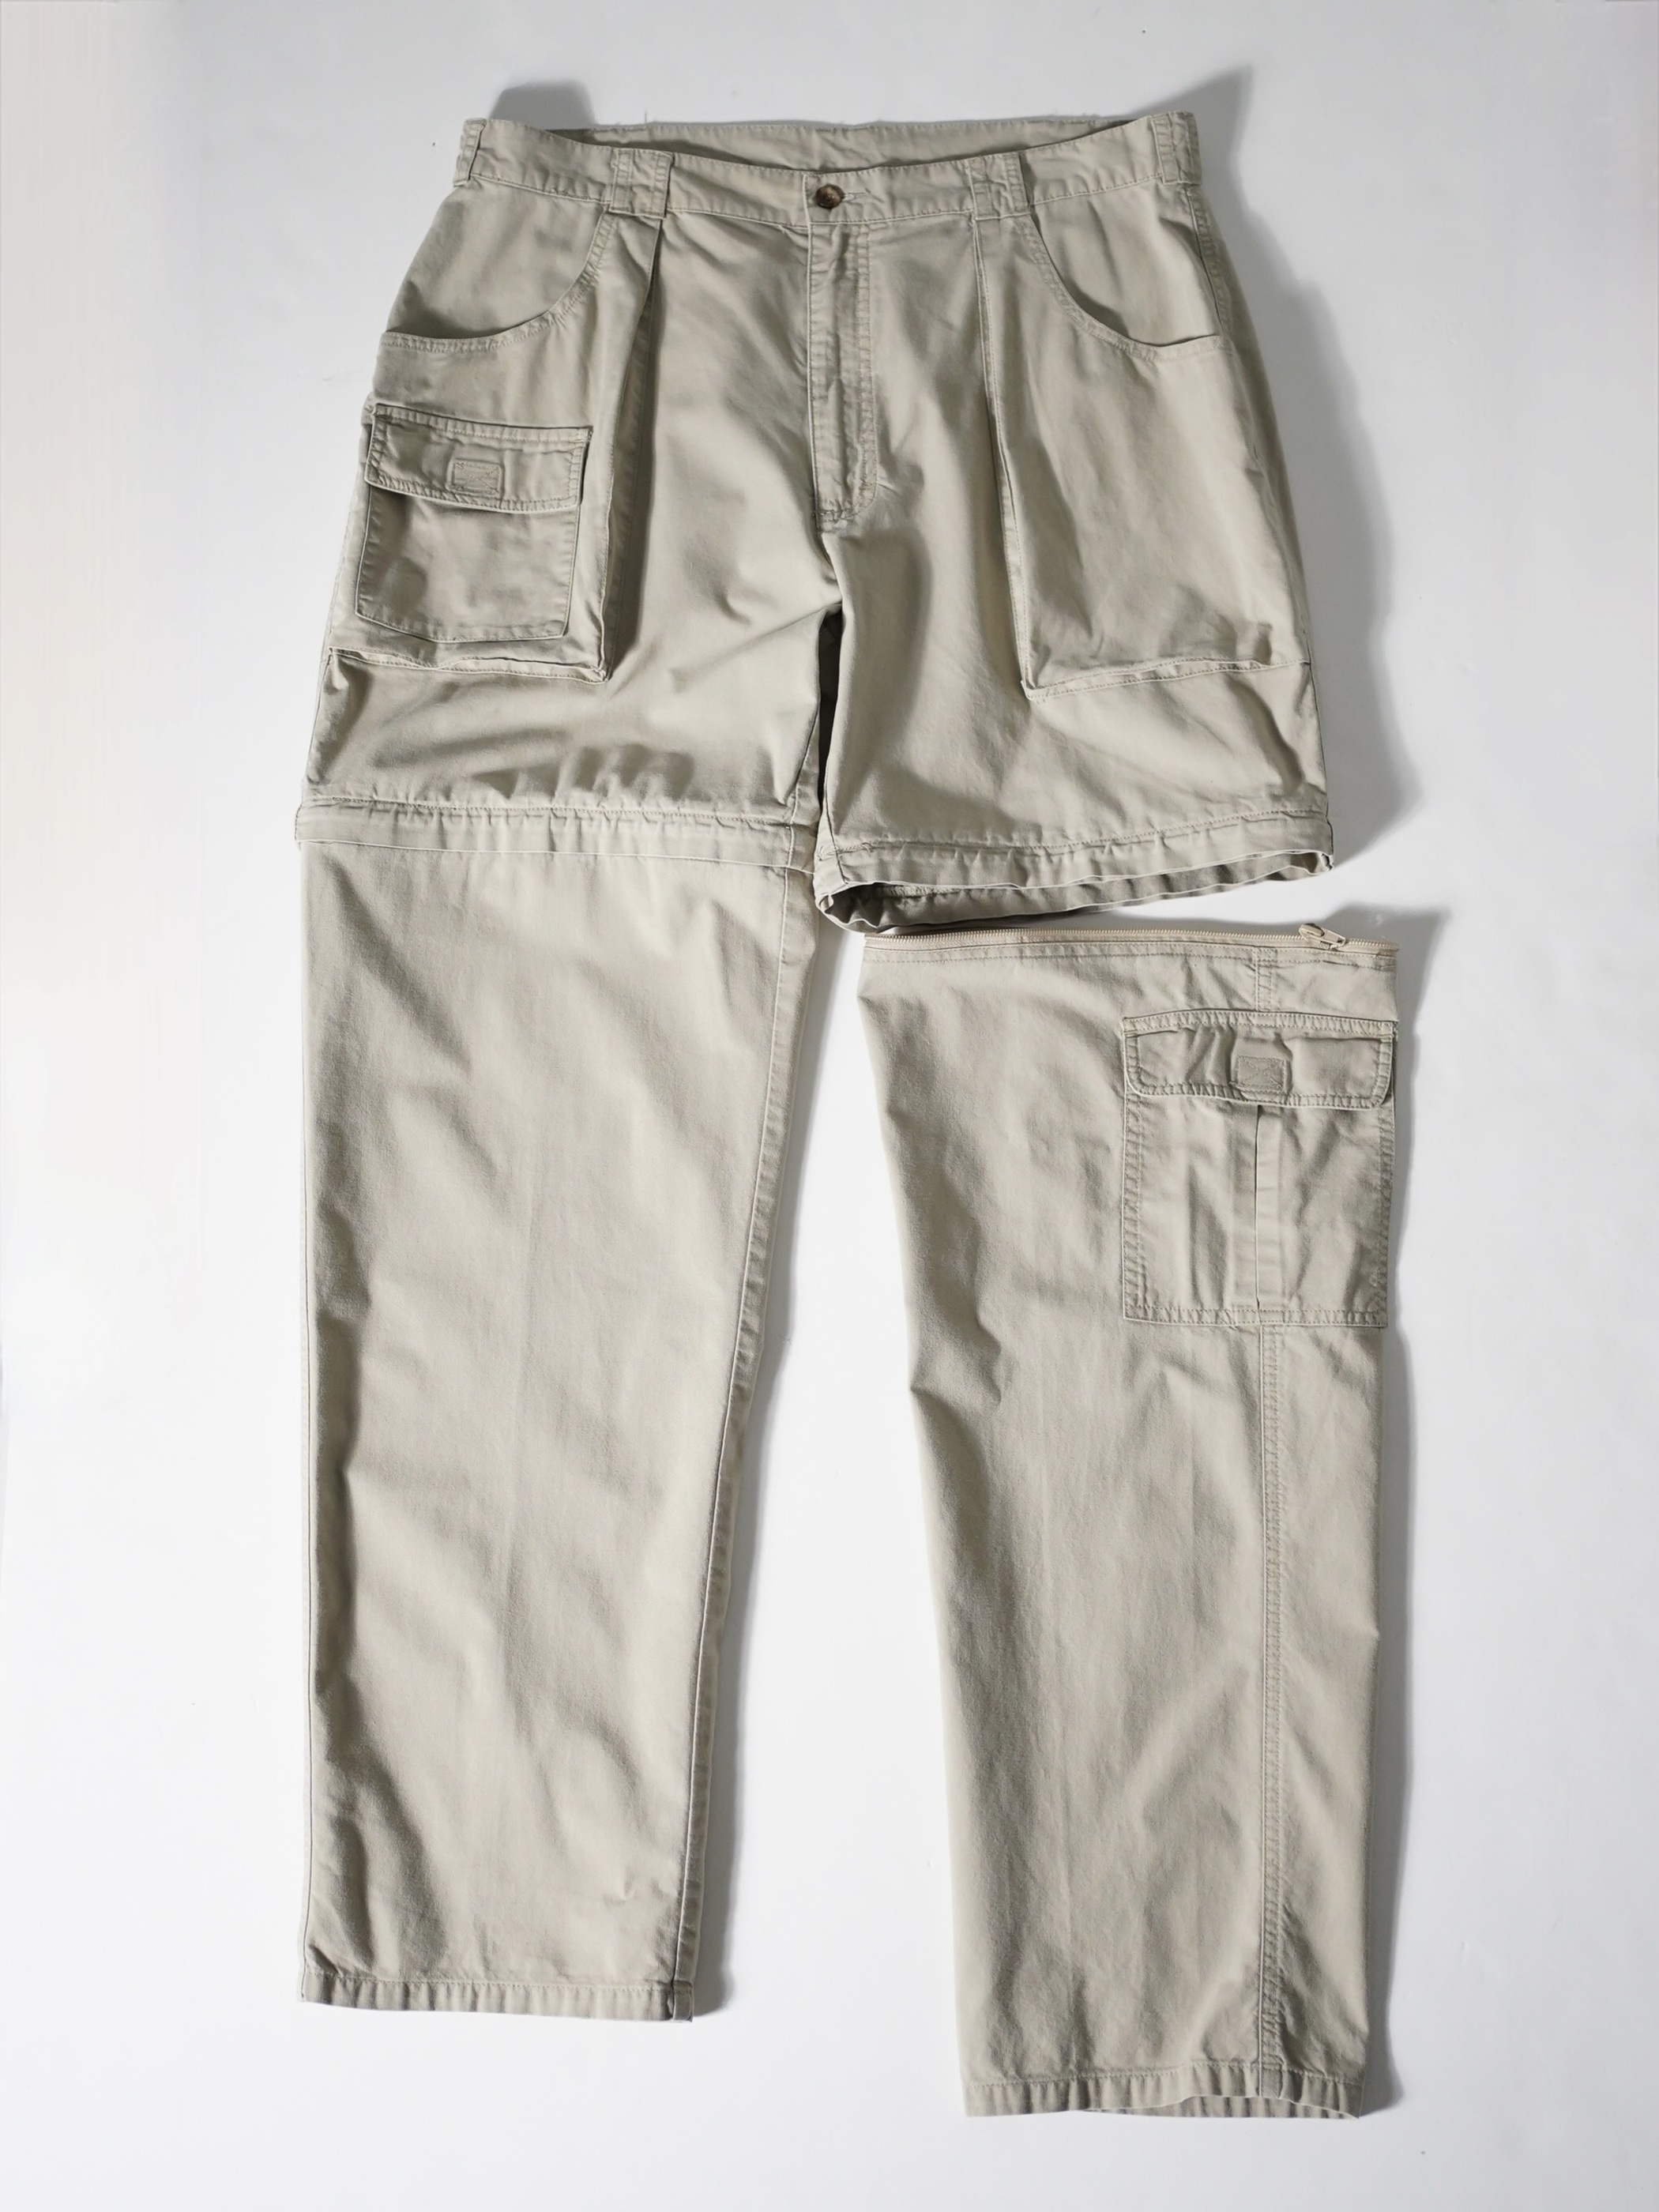 1990’s Woolrich Convertible gimmick bush pants